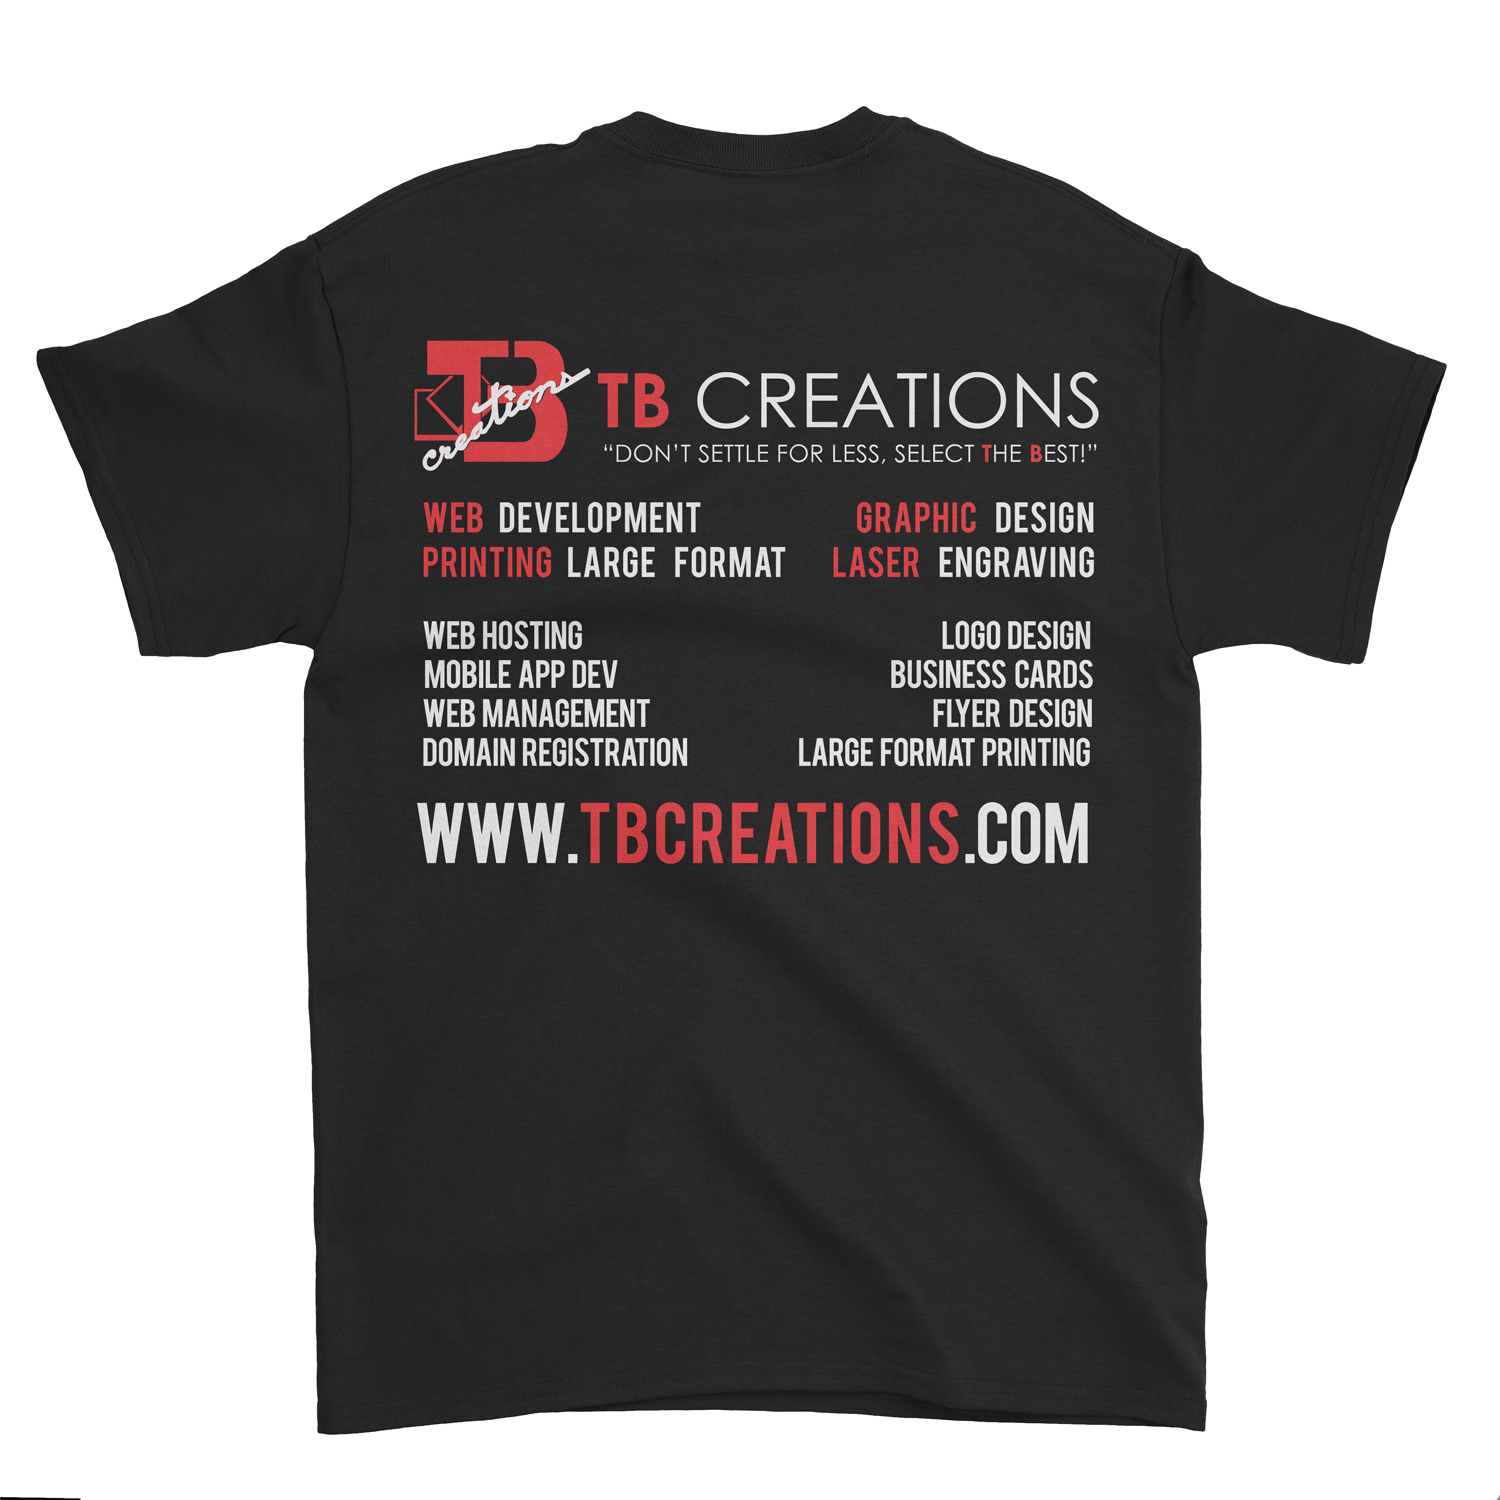 Get Branded Crew Neck Shirt – Black